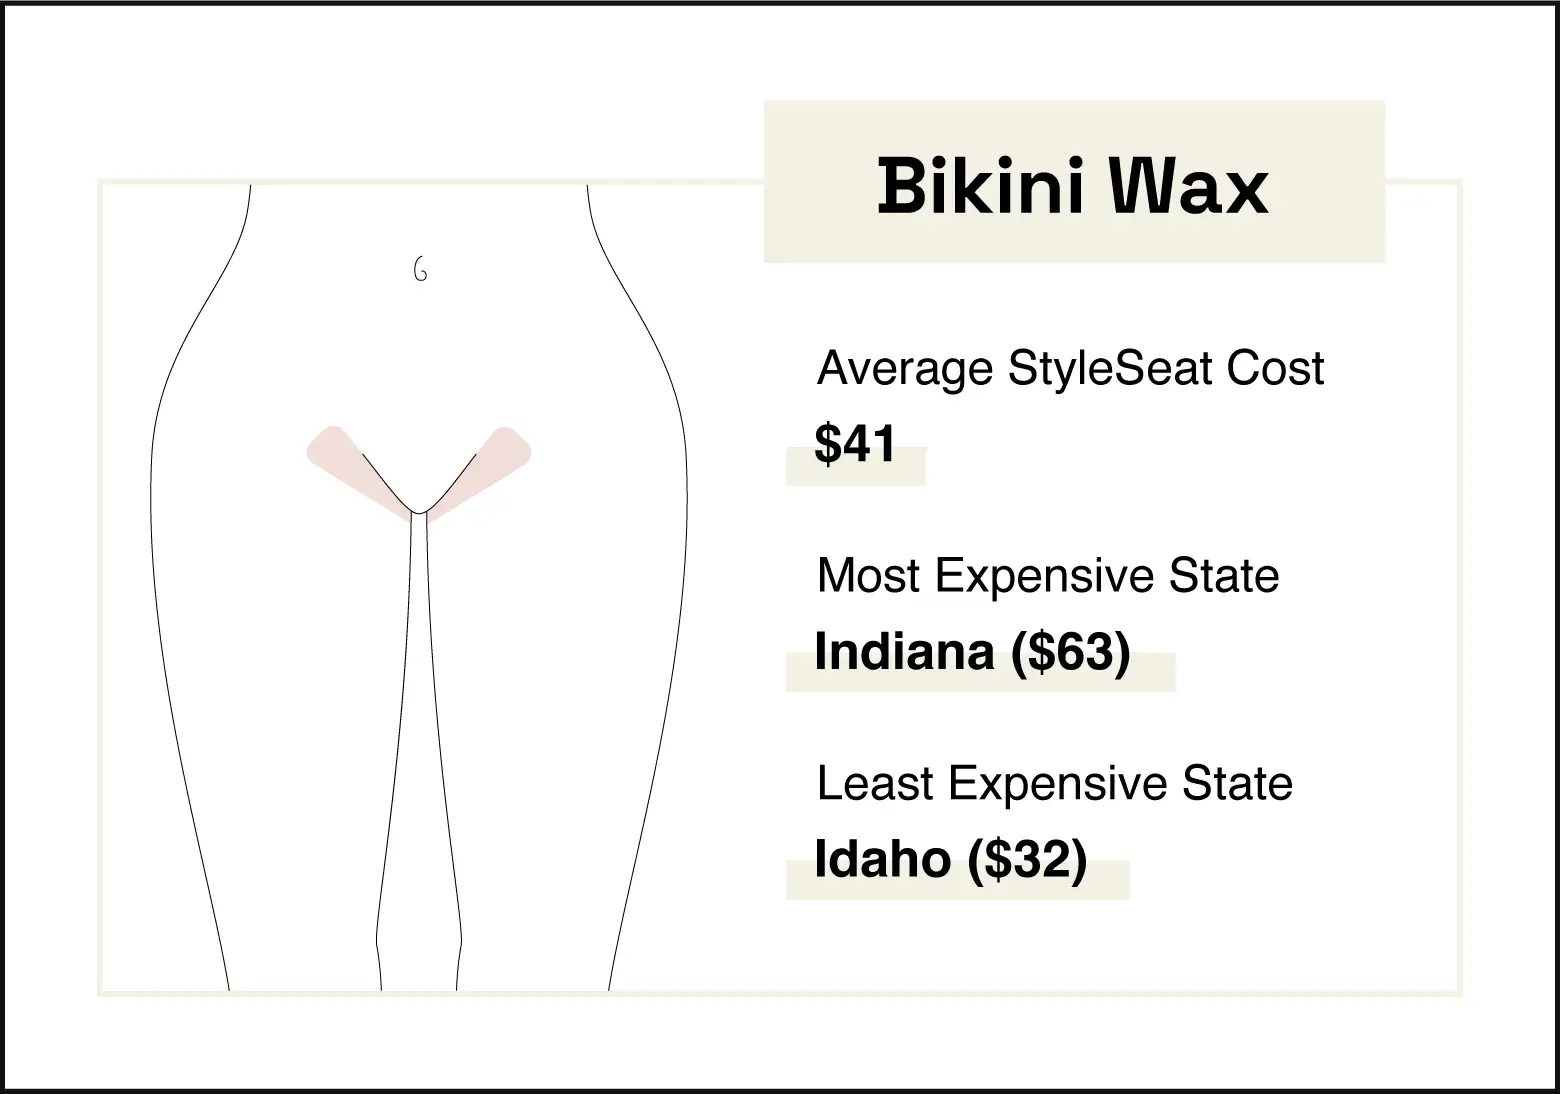 Image shows area where a bikini wax occurs. The average bikini wax on StyleSeat costs $41.